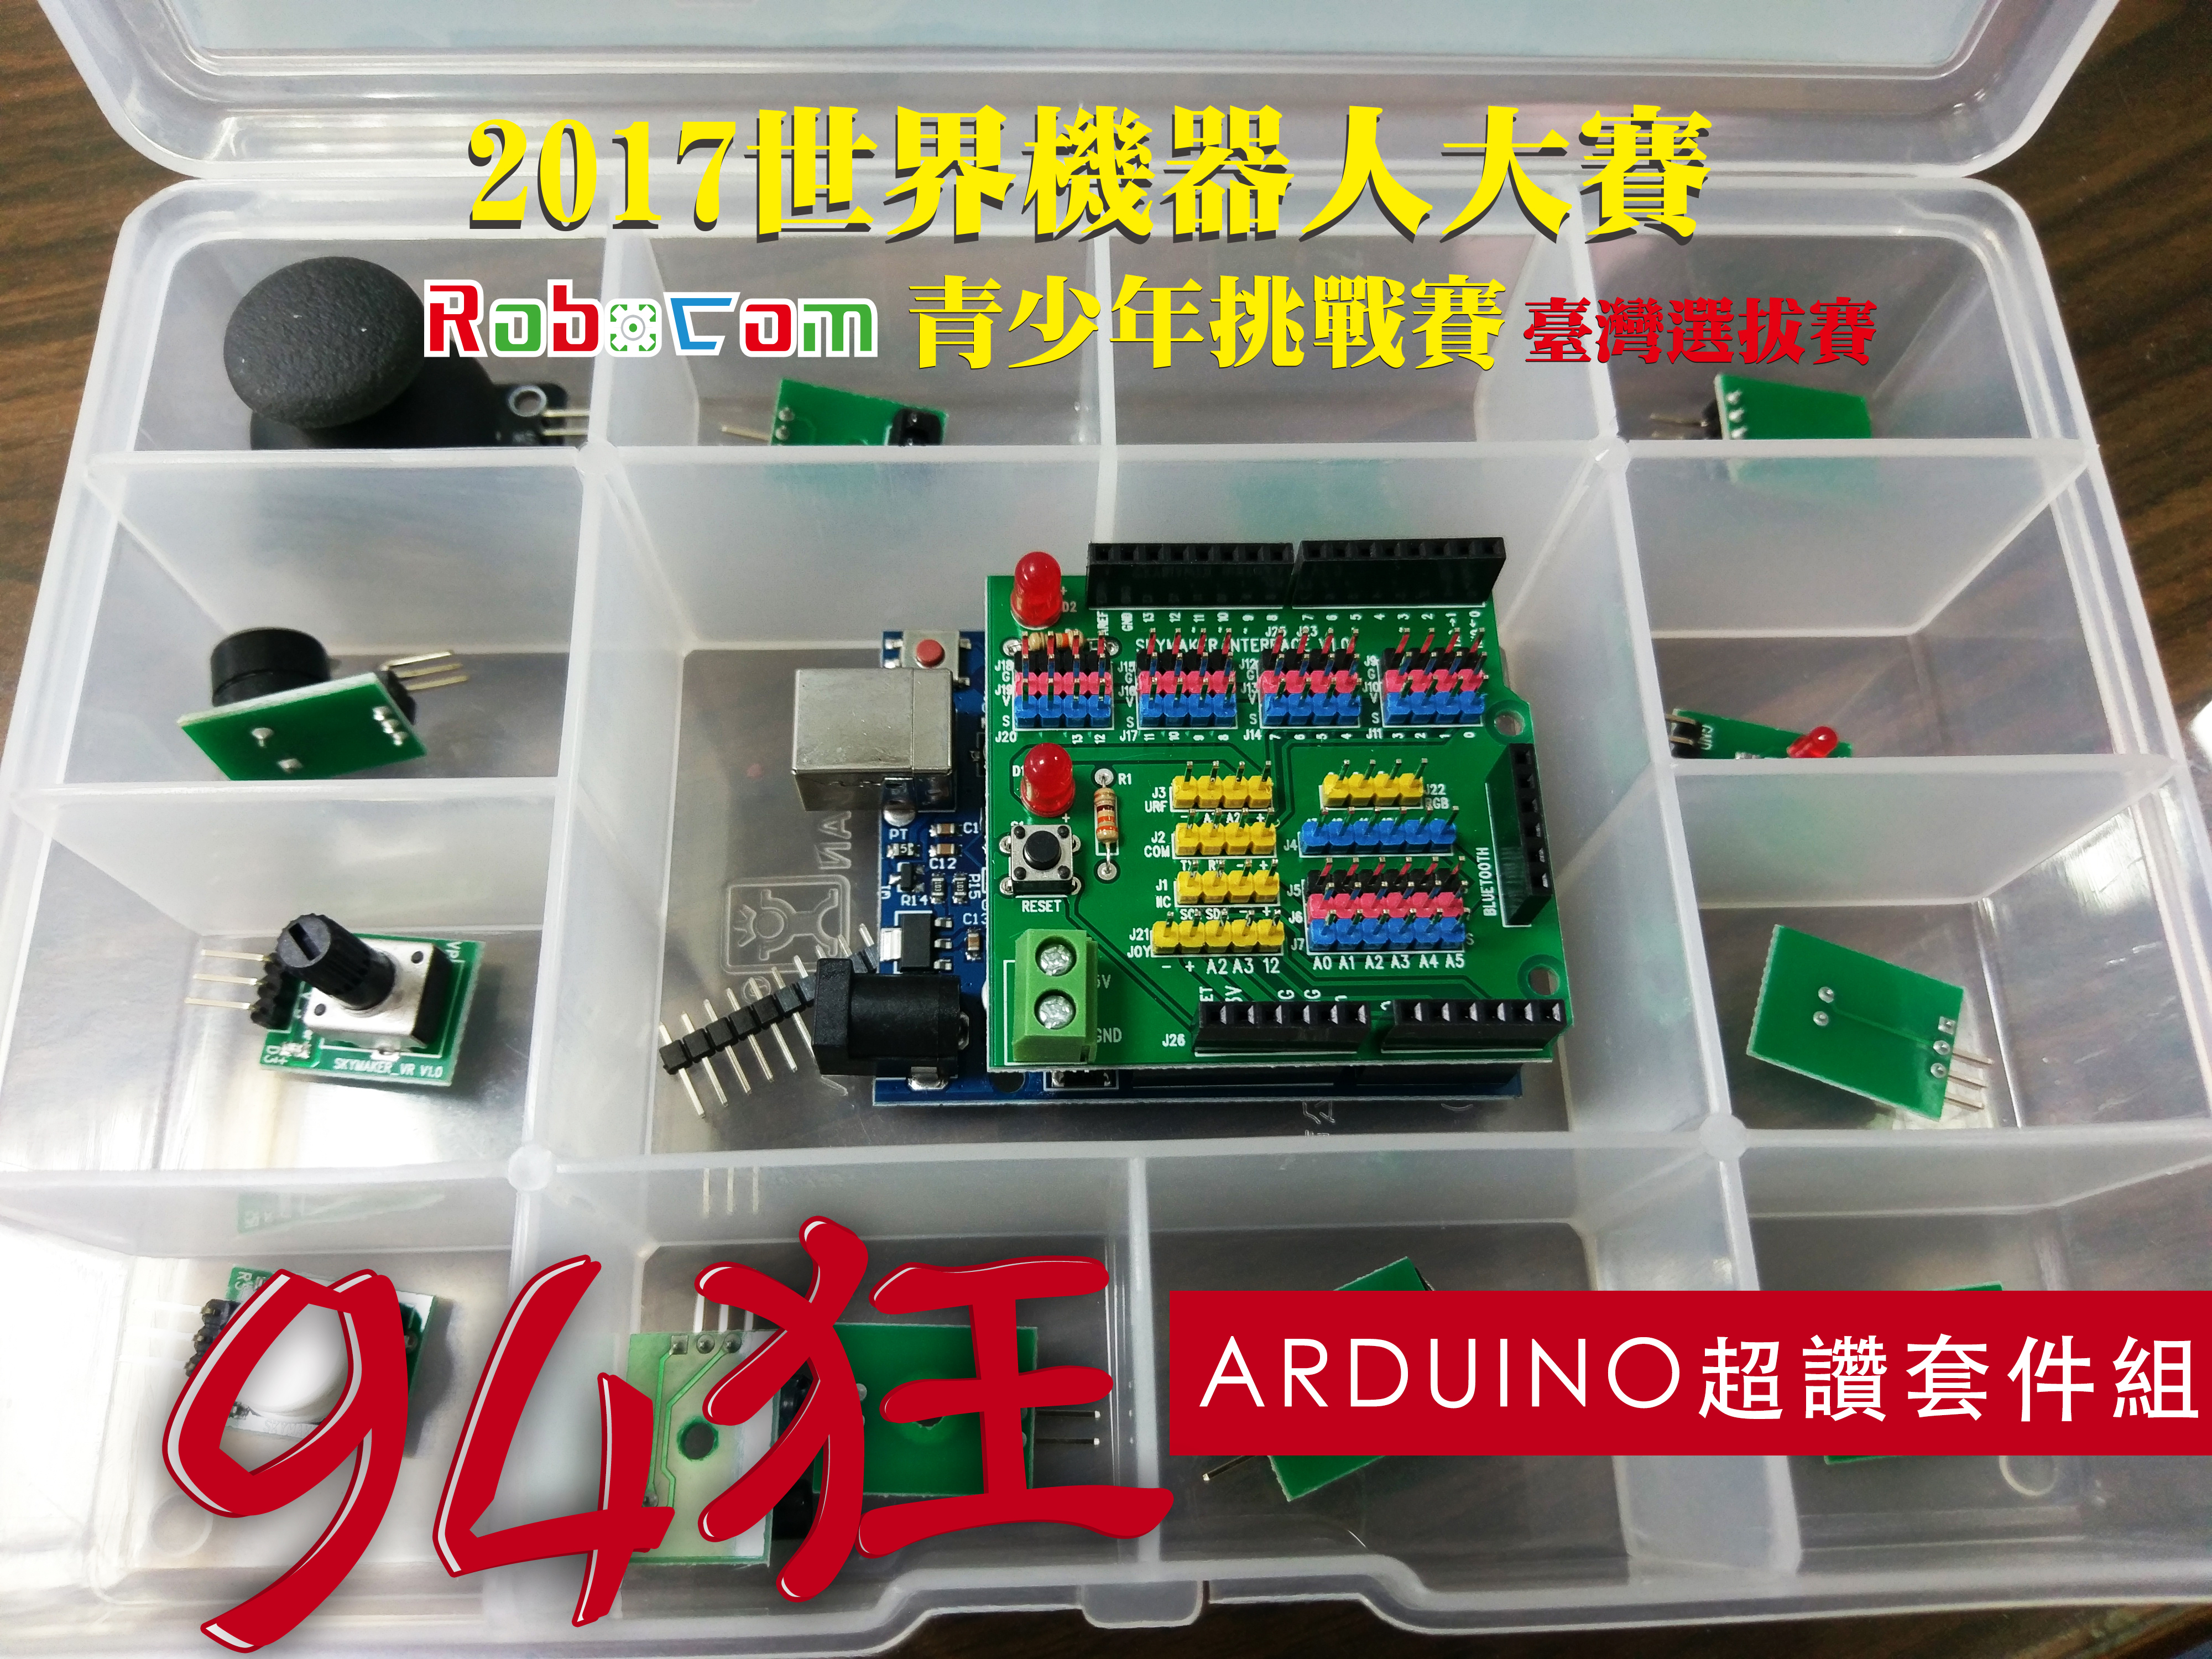 robocom世界機器人大賽贈品Arduino 套件組